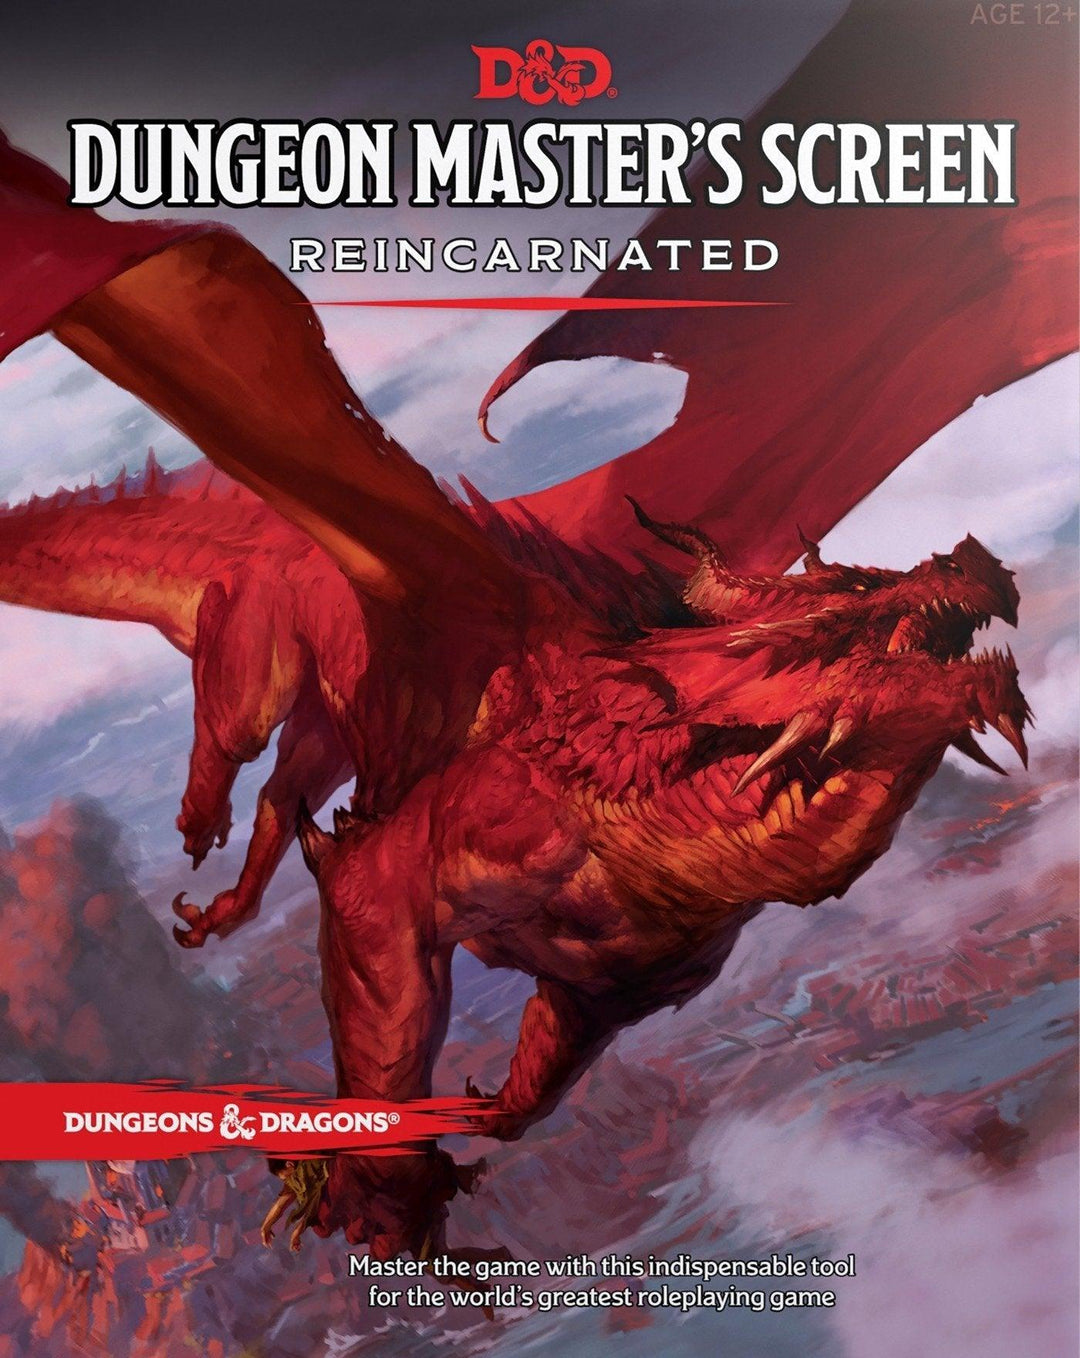 Dungeon Master's Screen Reincarnated (Dungeons & Dragons) - Brand My Case